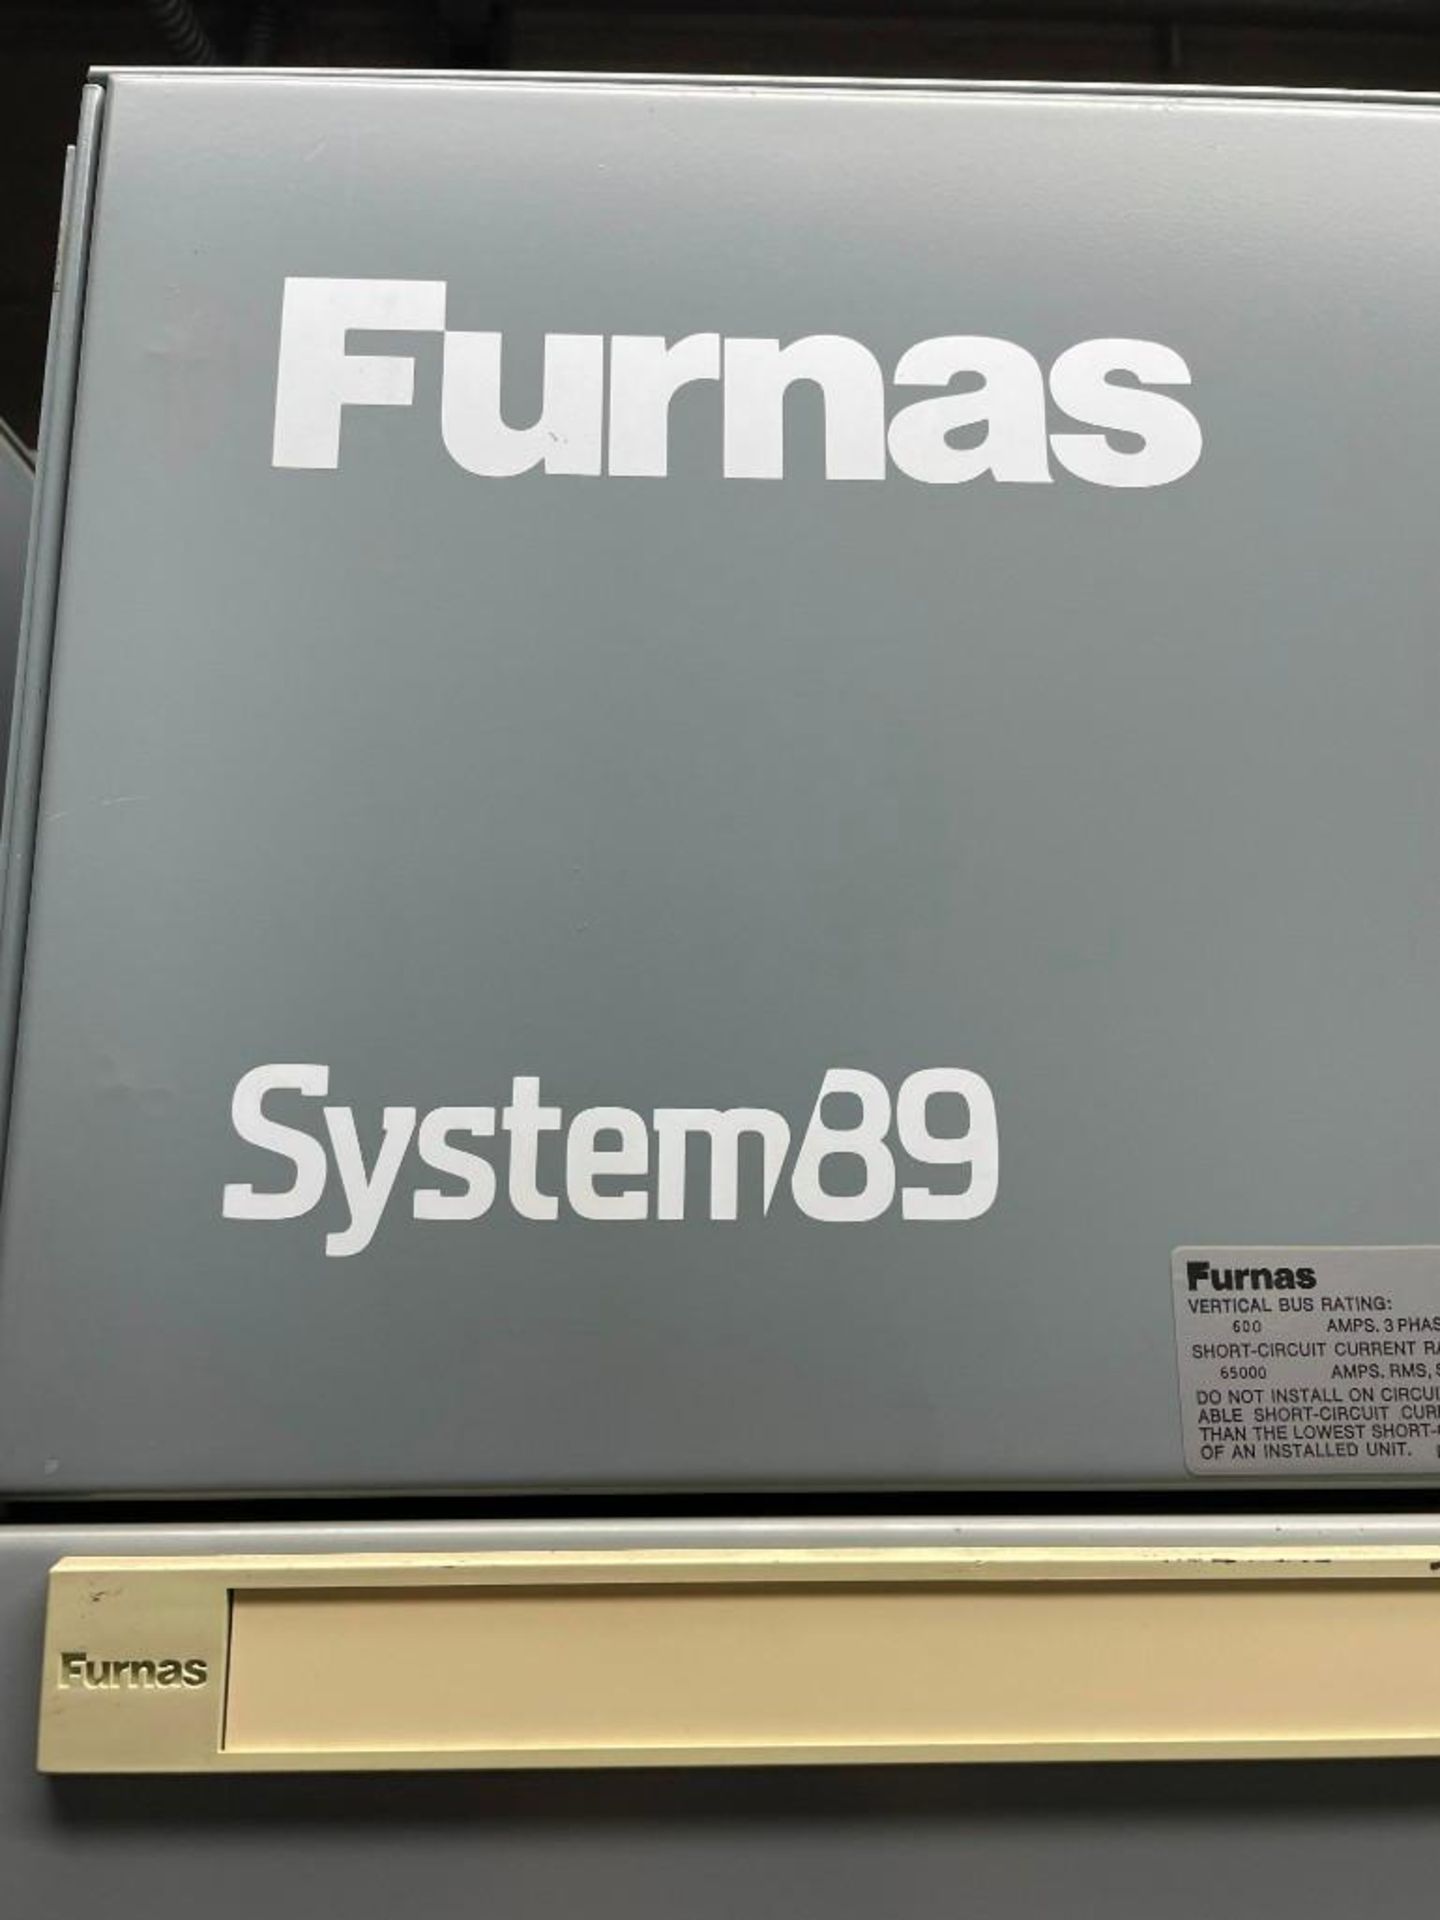 Furnas System 89 Model 89BFV9353-3 Motor Control Center - Image 6 of 7